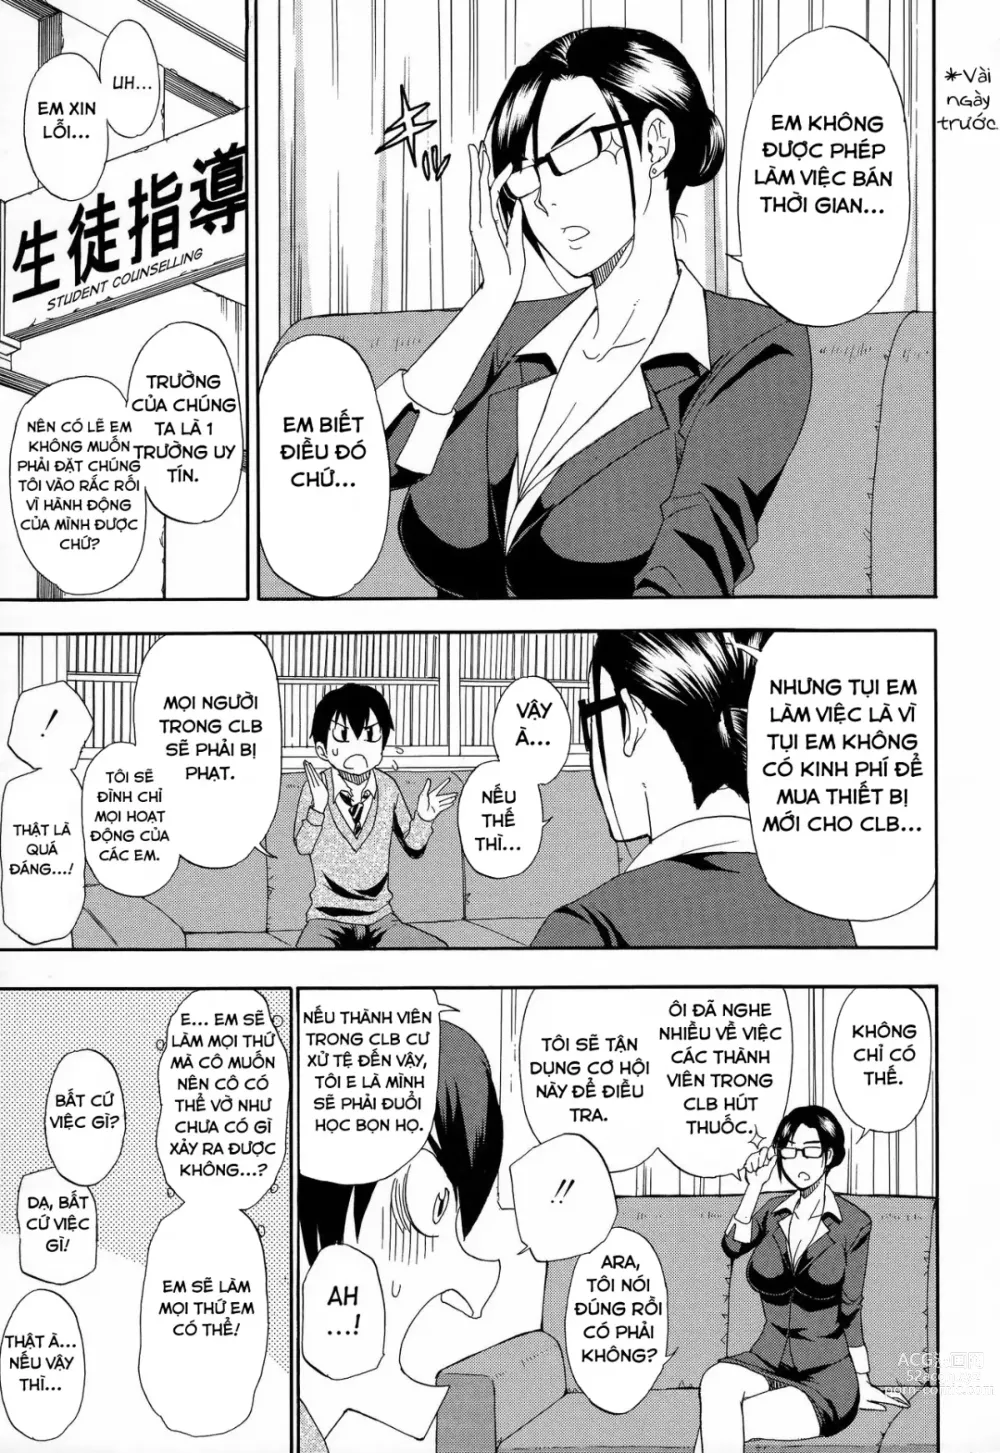 Page 7 of manga PETLIFE